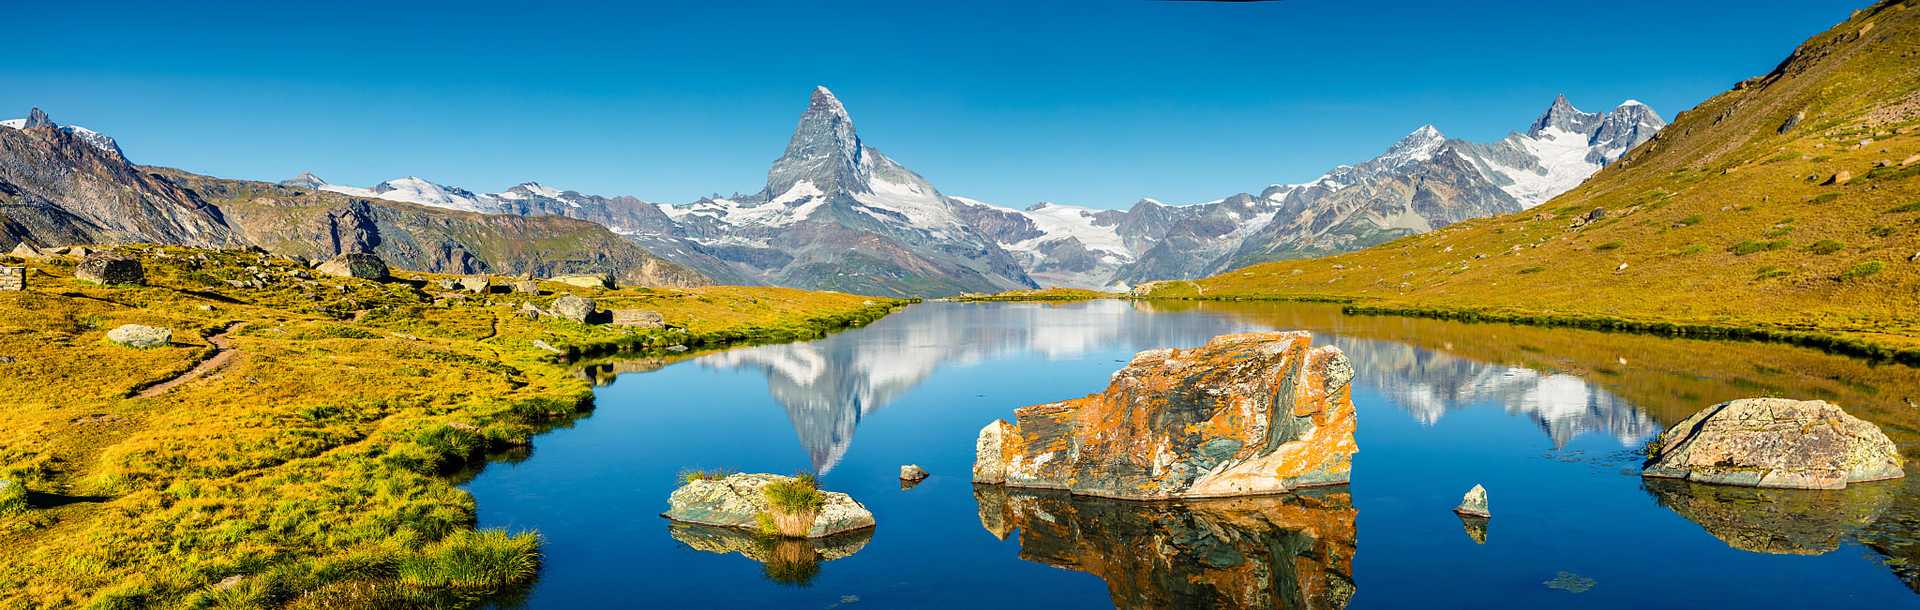 Stillisee Lake with Matterhorn in Switzerland